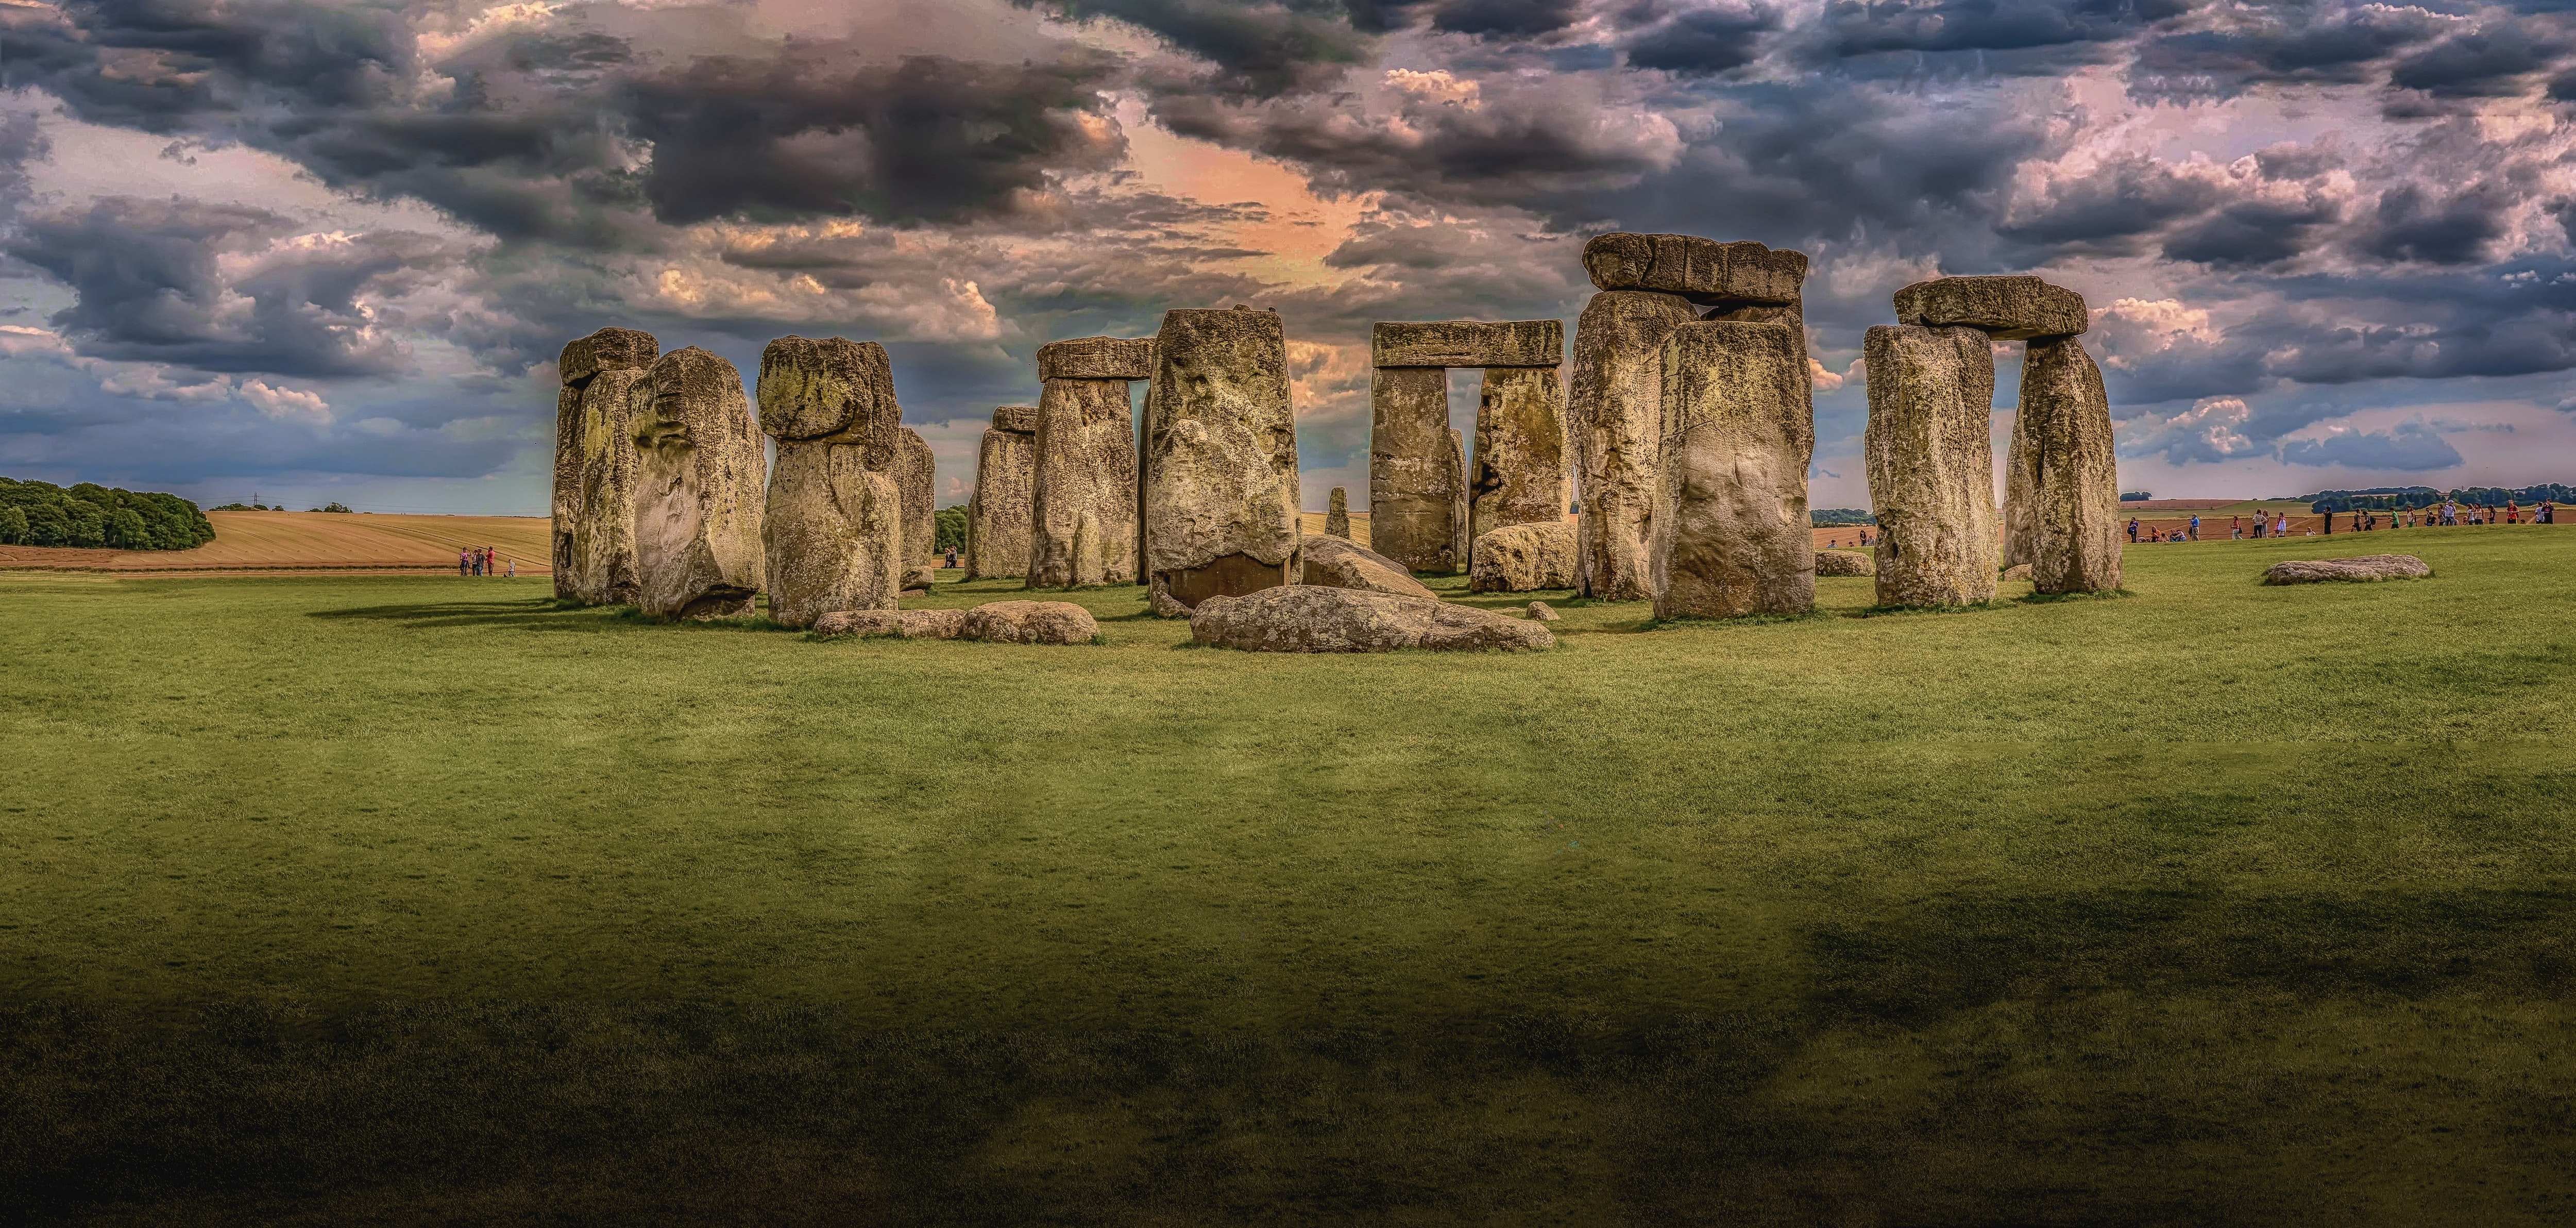 Stonehenge photos download the best free stonehenge stock photos hd images